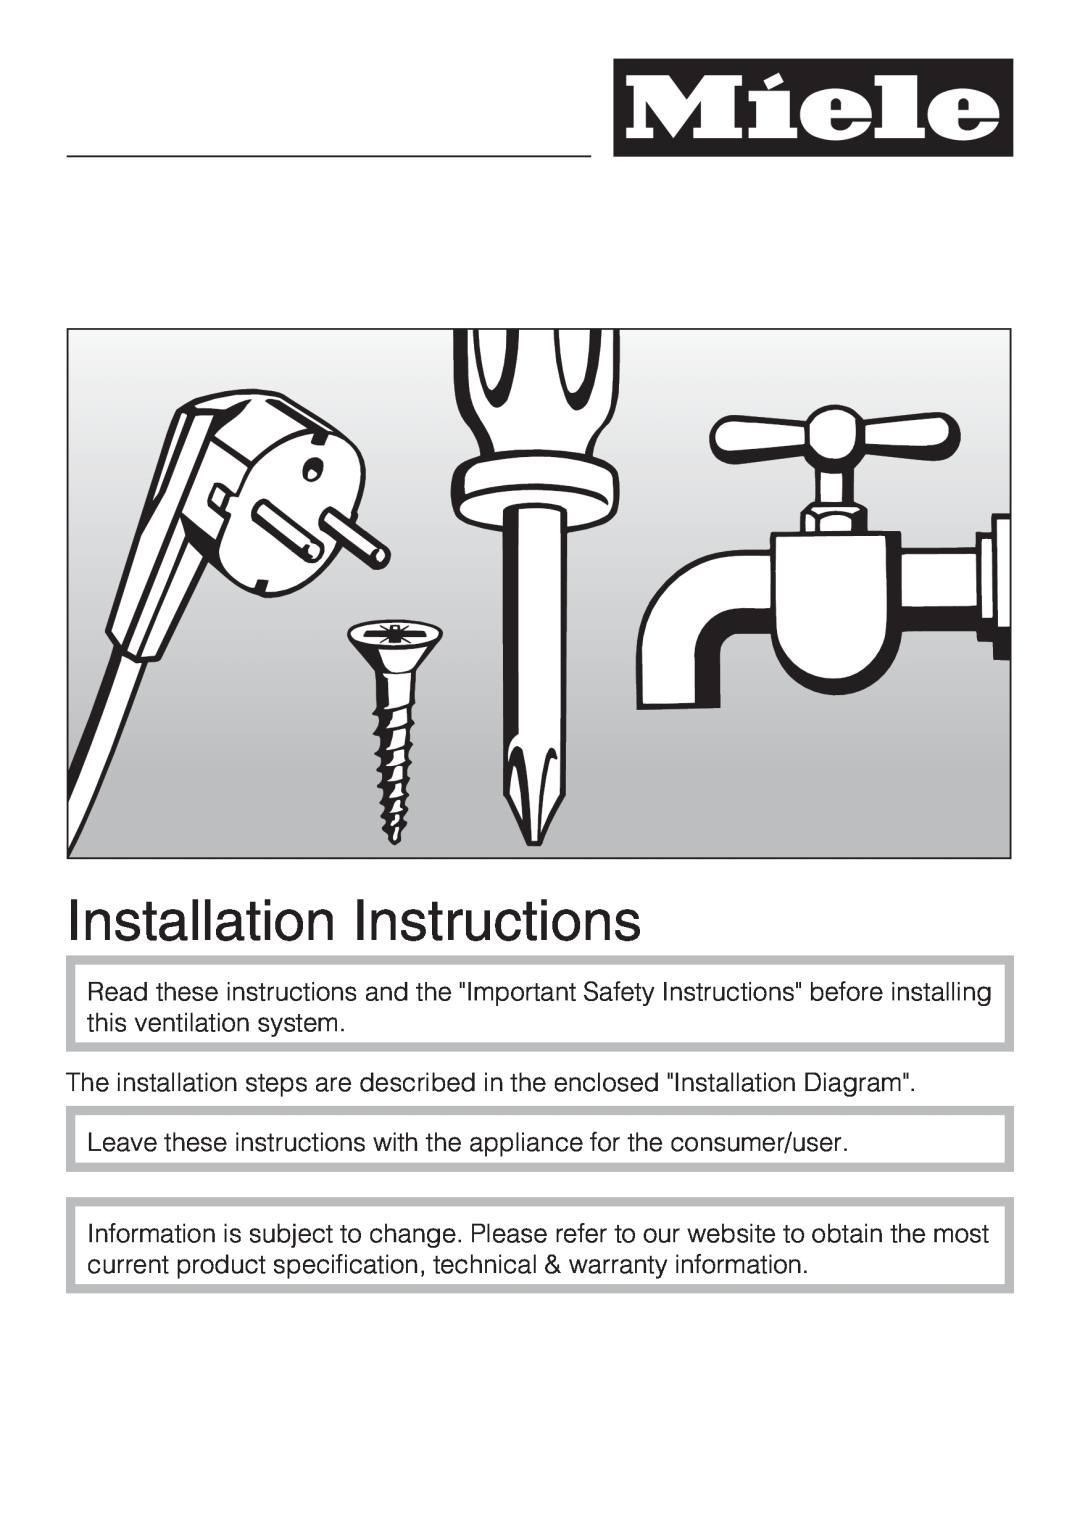 Miele DA 398-5, DA 399-5 installation instructions Installation Instructions 